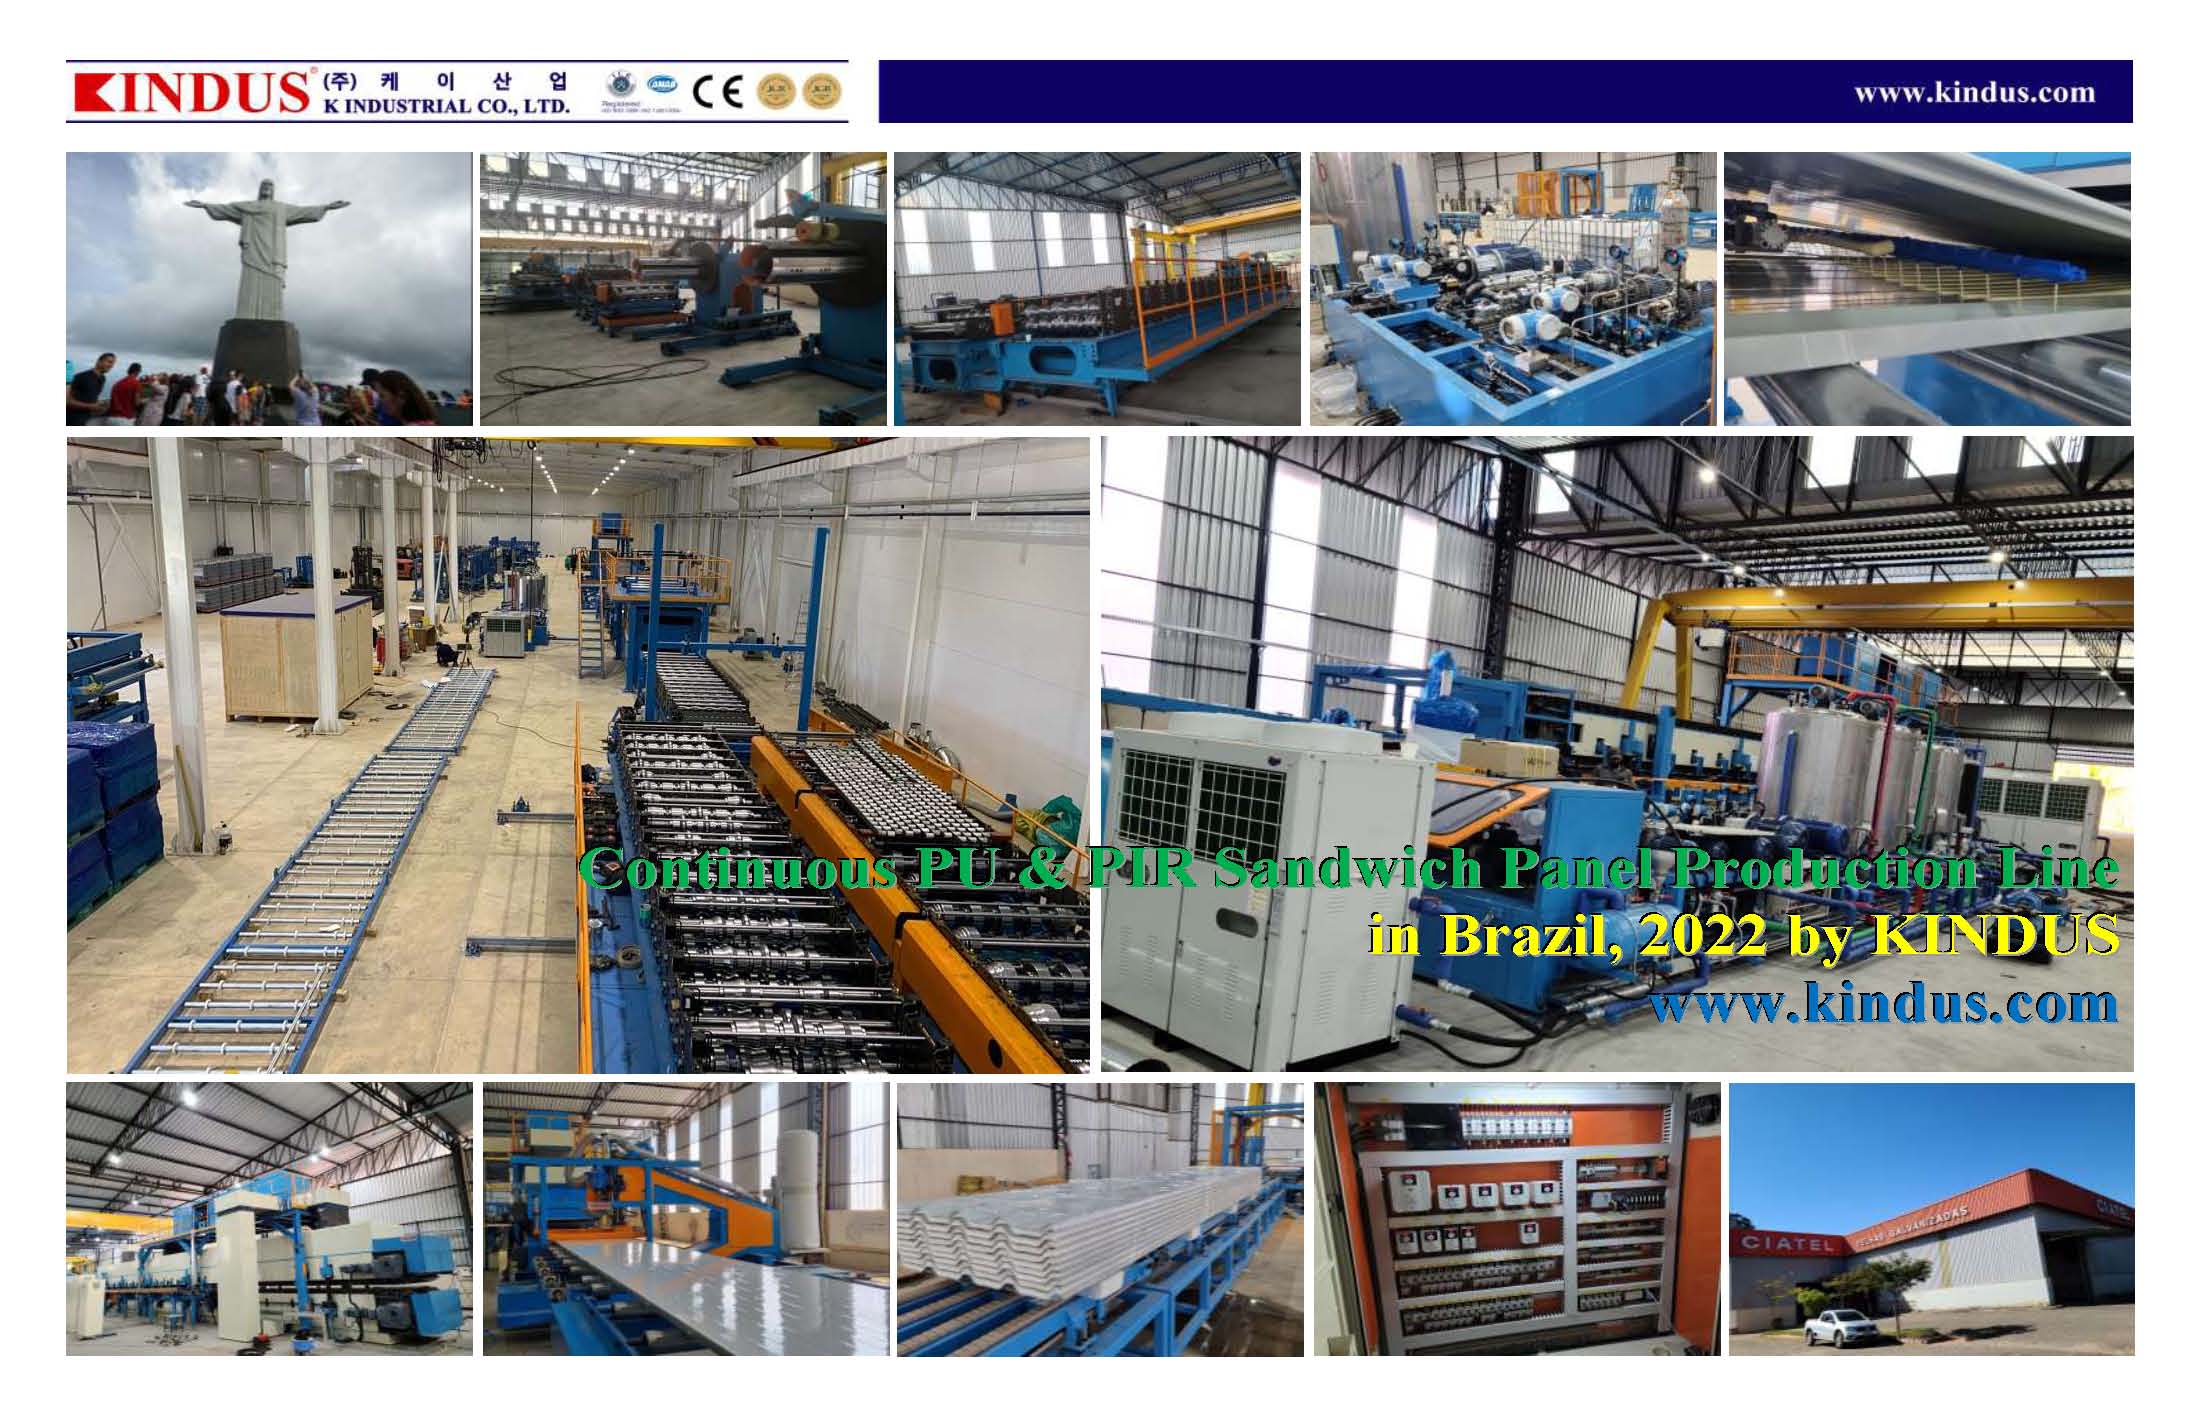 PU/PIR sandwich panel production line in Brazil